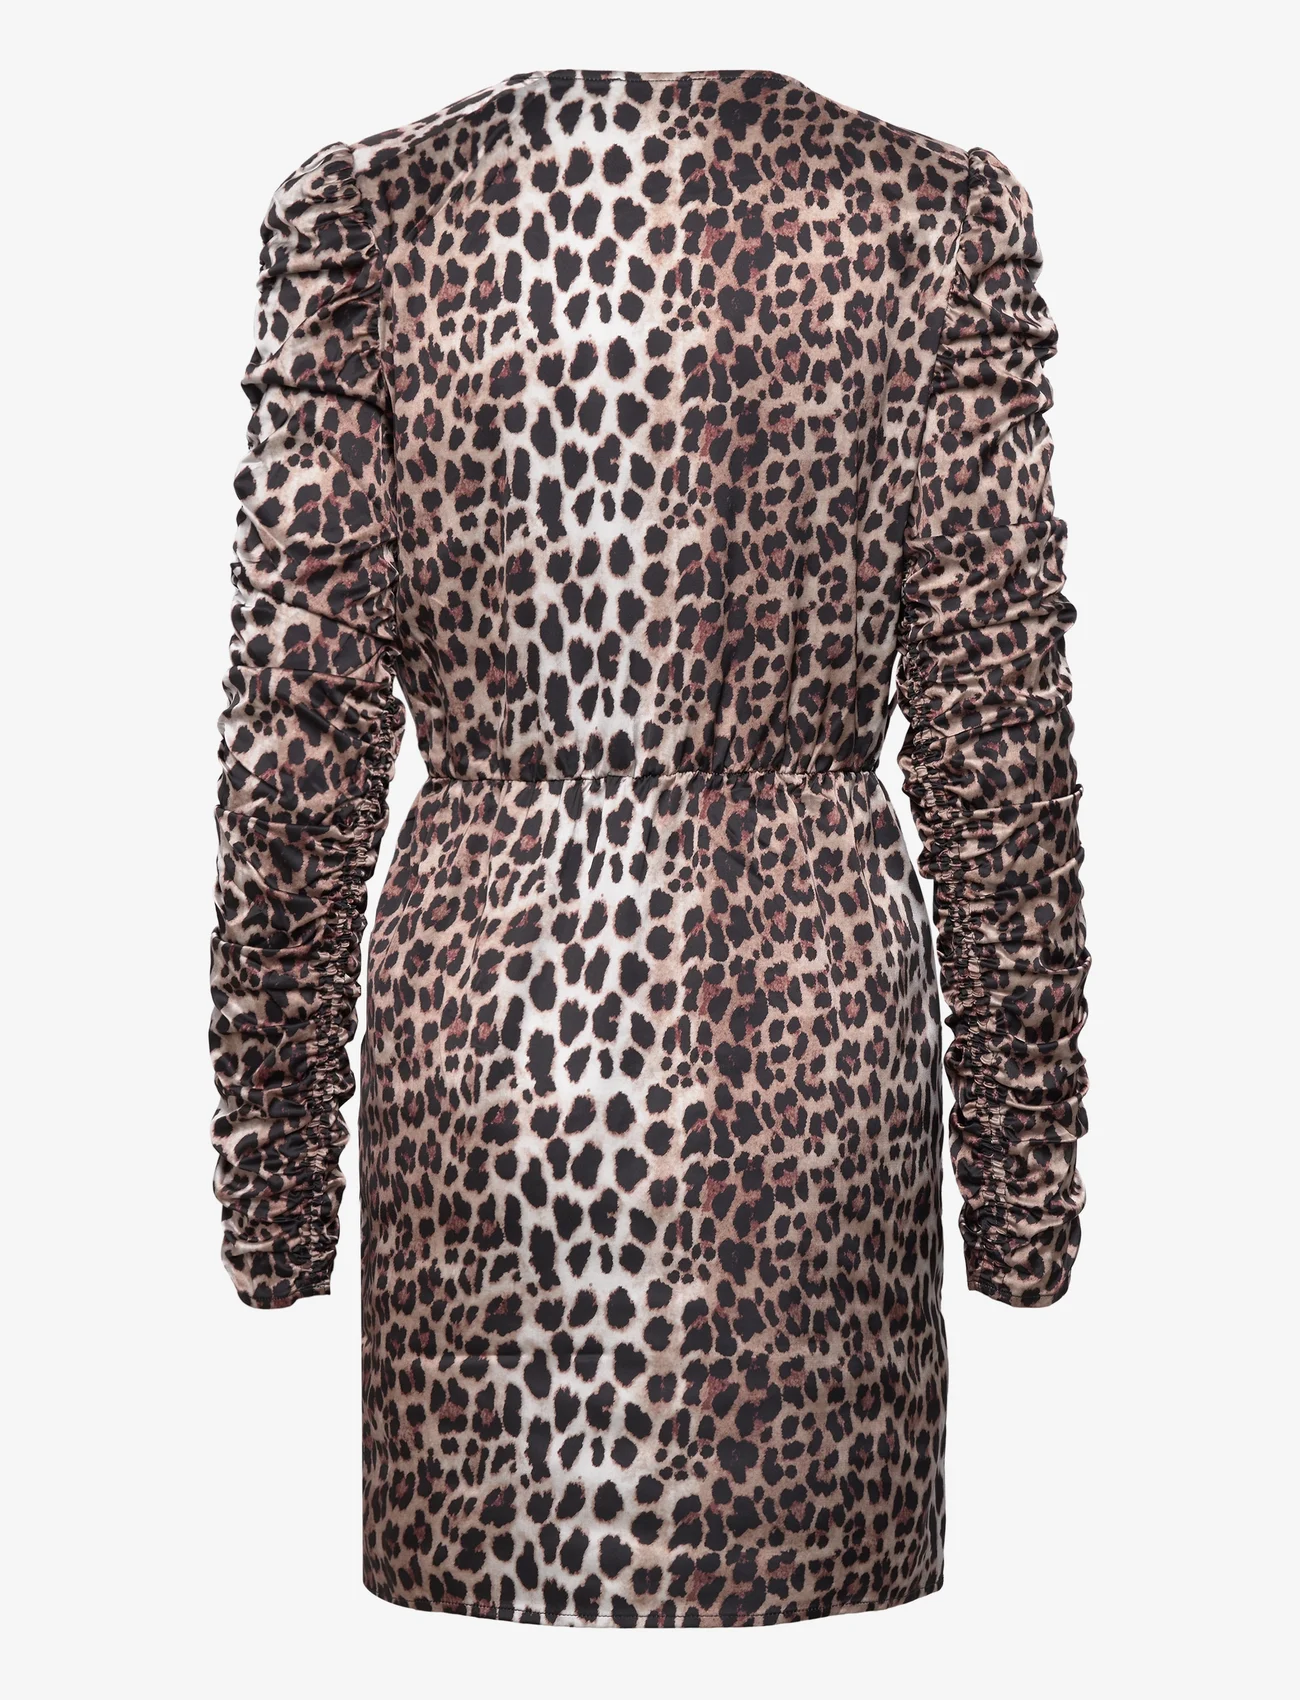 Notes du Nord - Hayes Recycled Short Dress - sukienki letnie - leopard - 1